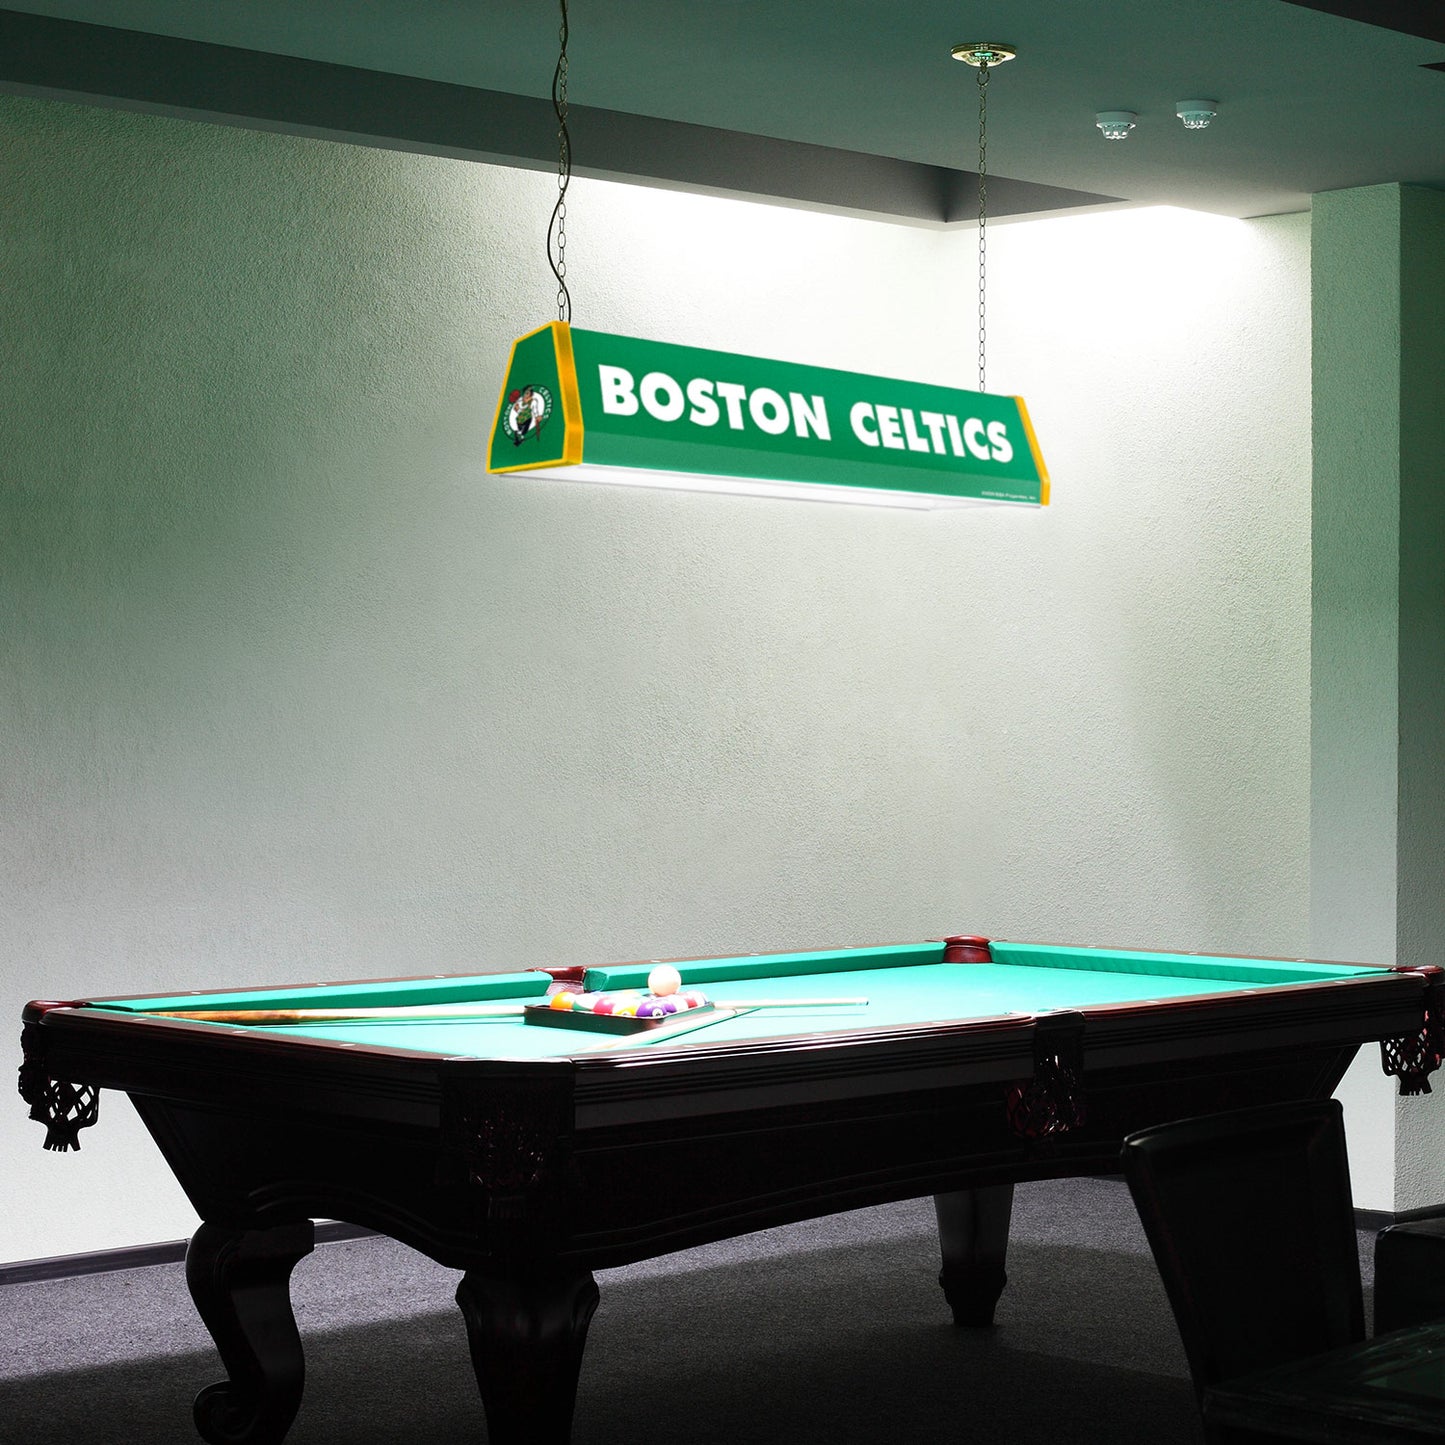 Boston Celtics Standard Pool Table Light Room View